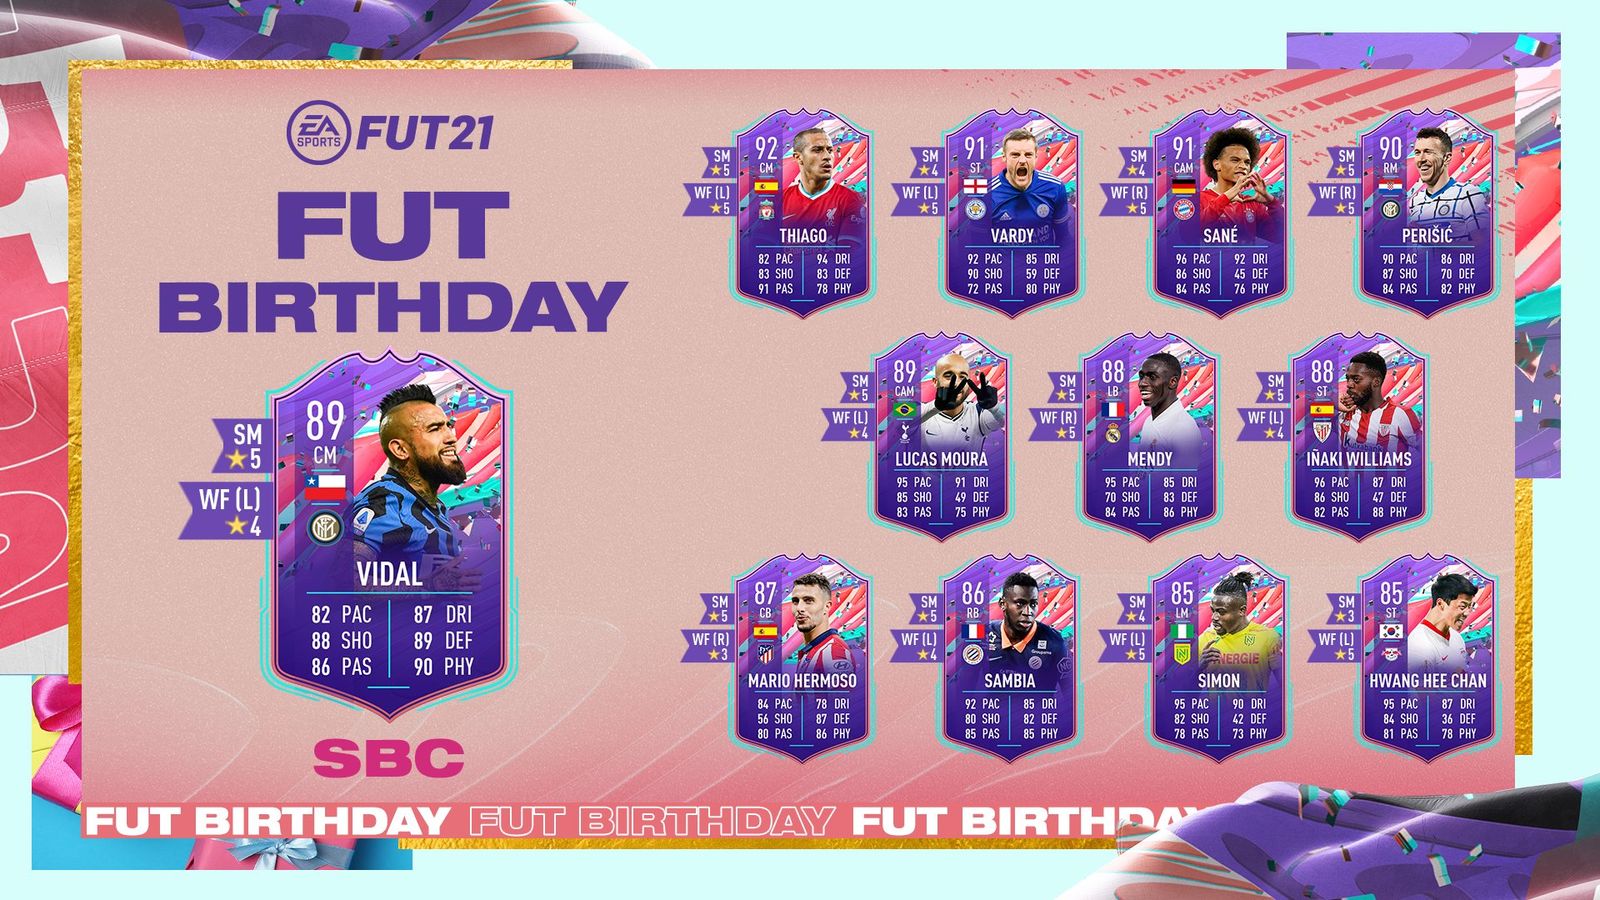 FIFA 21 FUT 21 Ultimate Team FUT Birthday SBC Arturo Vidal